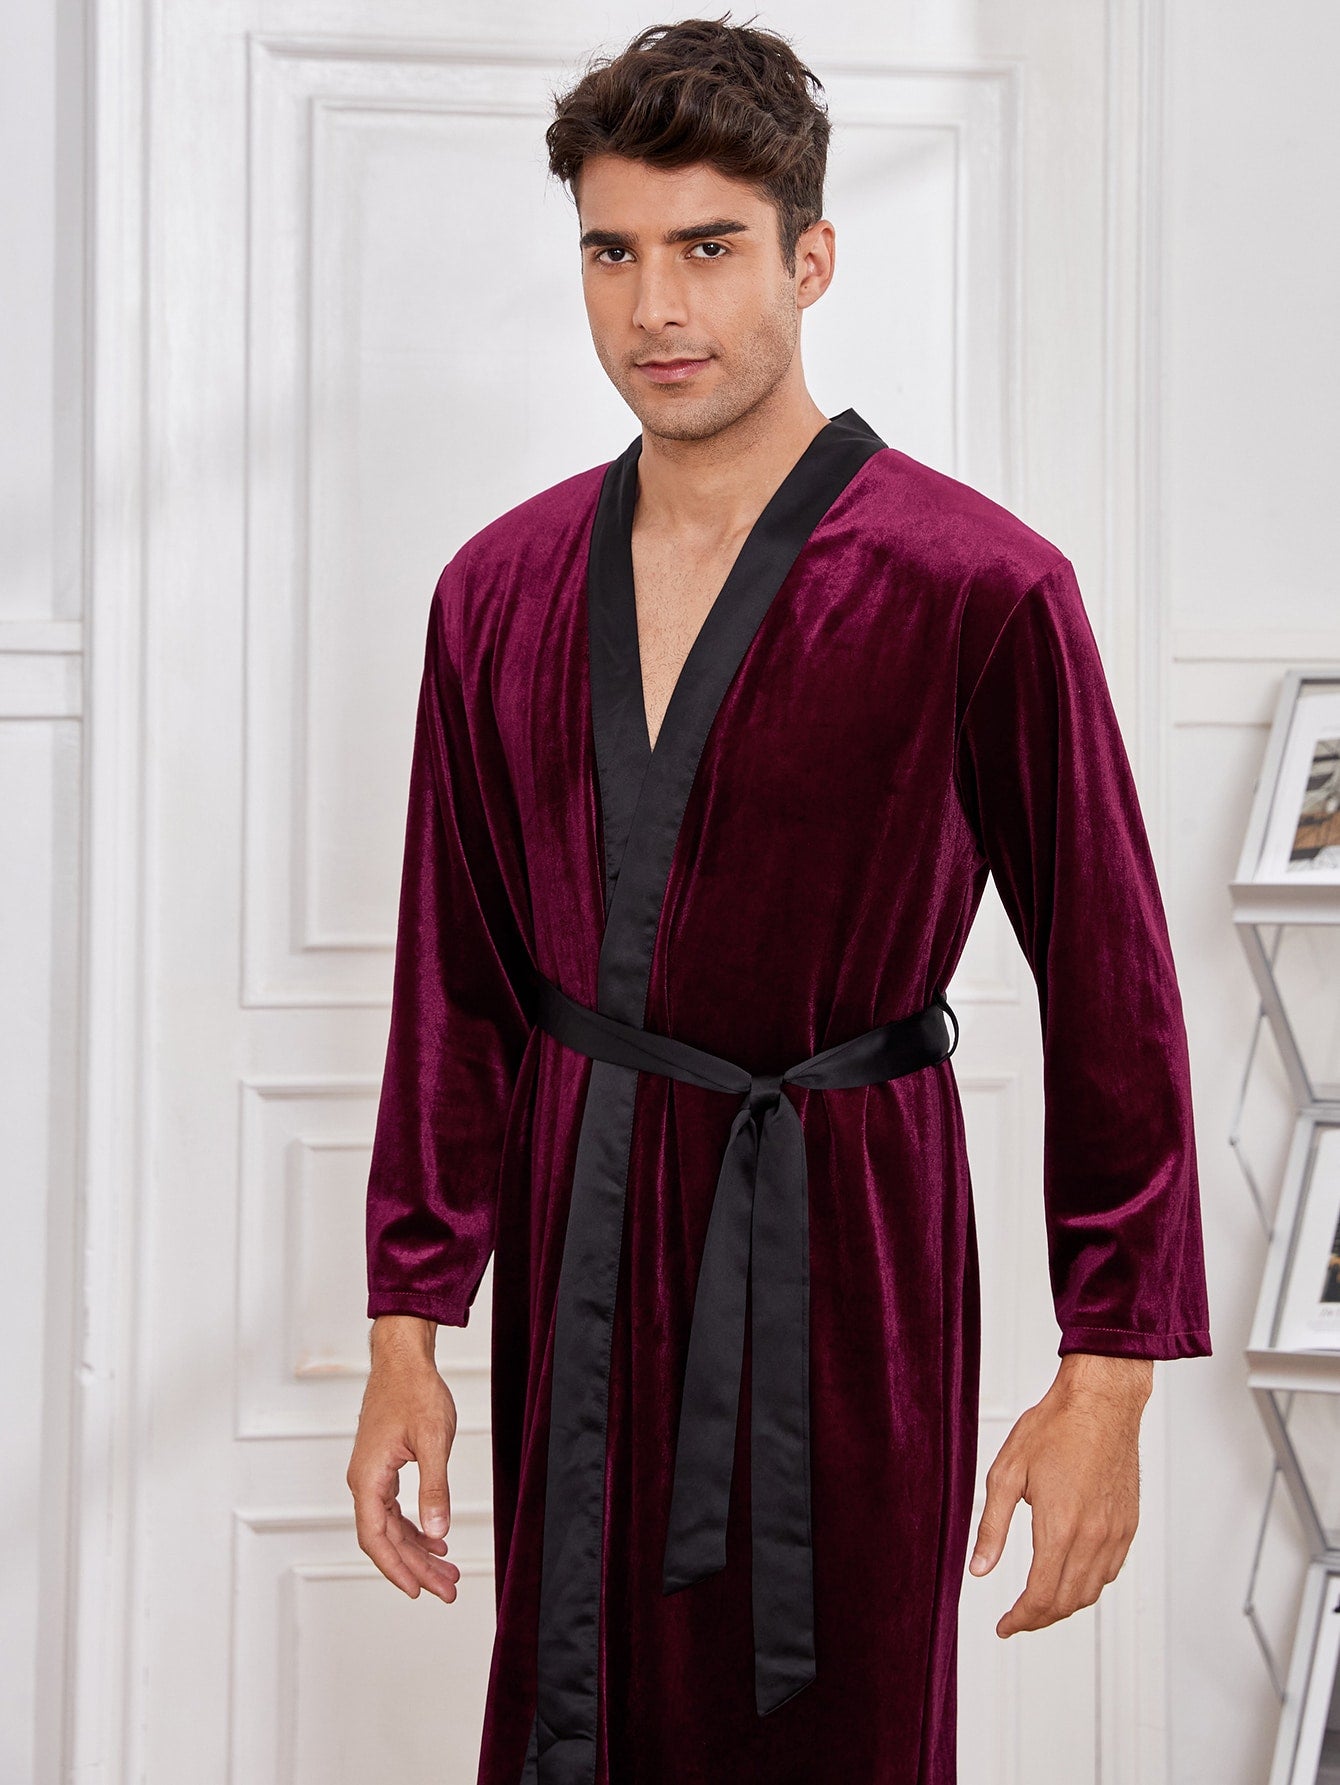 Burgundy Contrast Tape Belted Lounge Sleepwear Robe